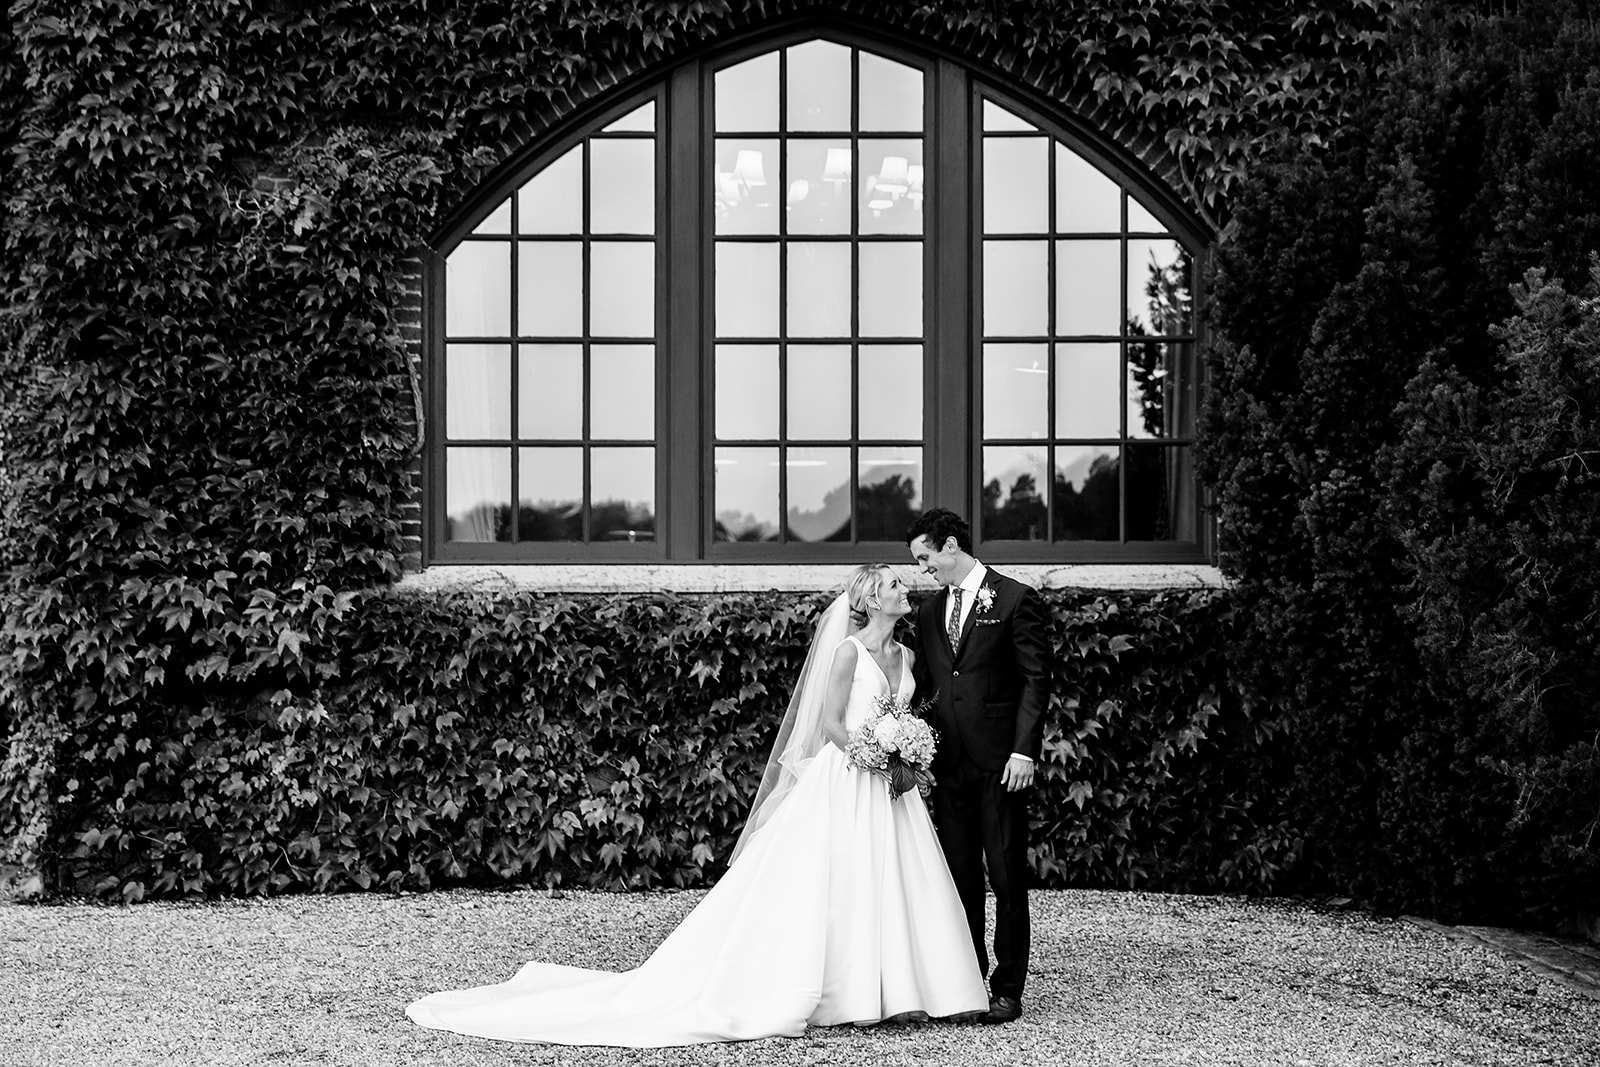 Logan  Jareds Wedding at Dover Hall Estate - Image Property of www.j-dphoto.com